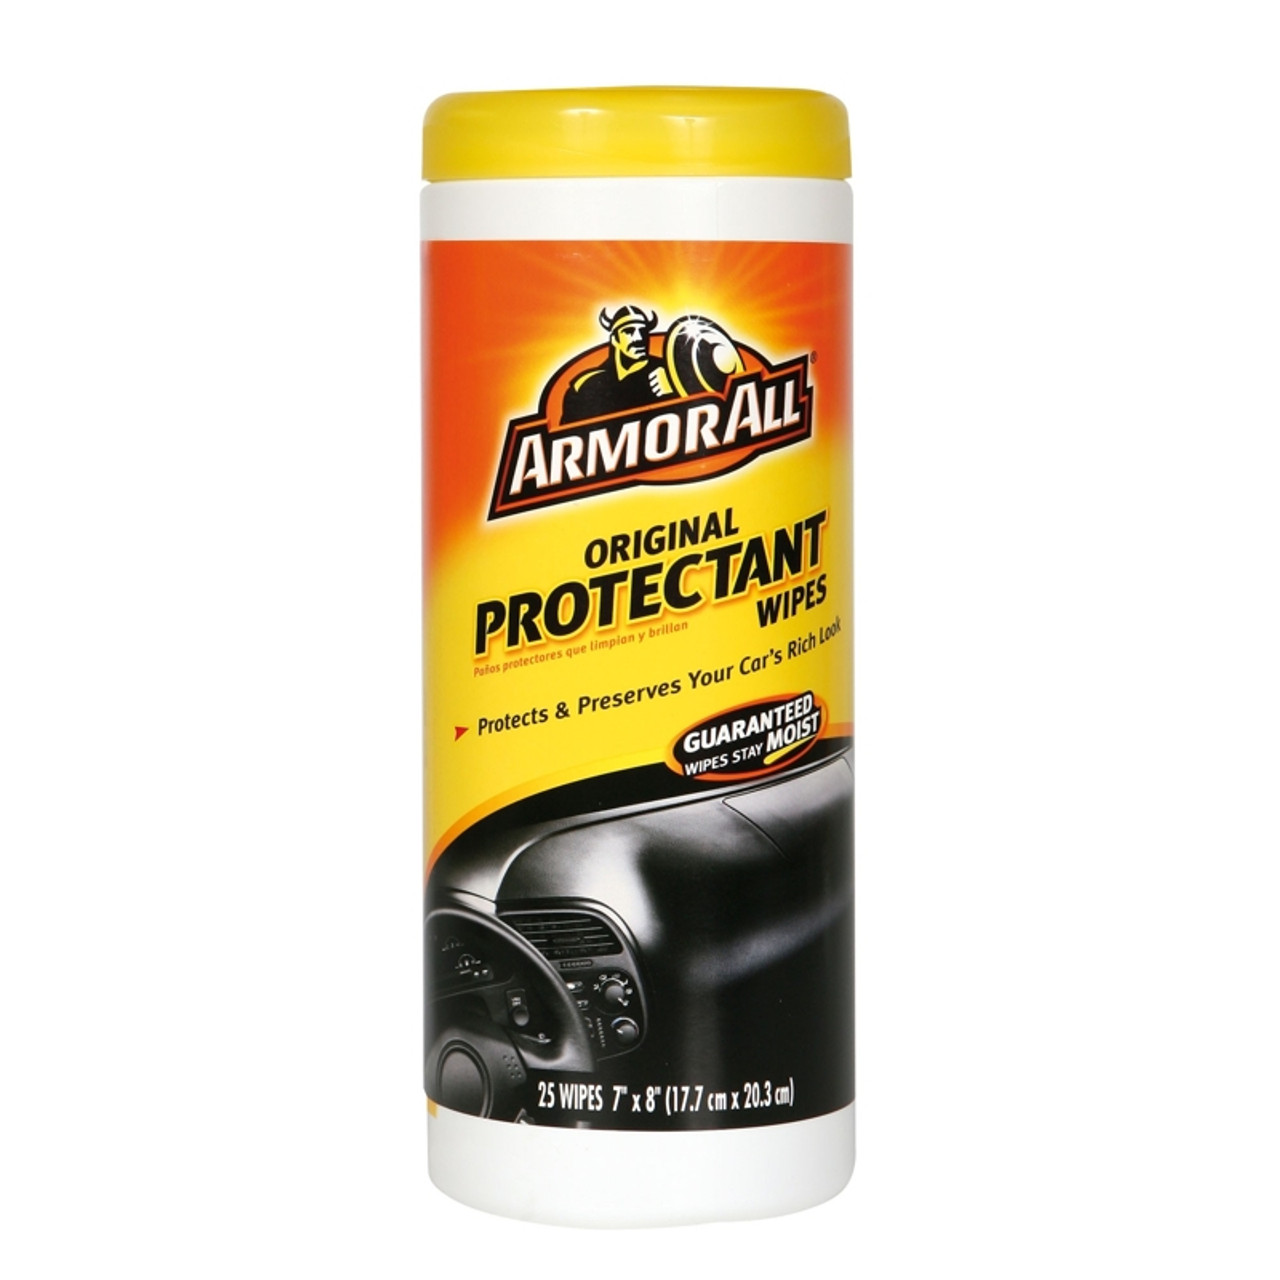 Armor All Tire Foam Protectant - 20 oz